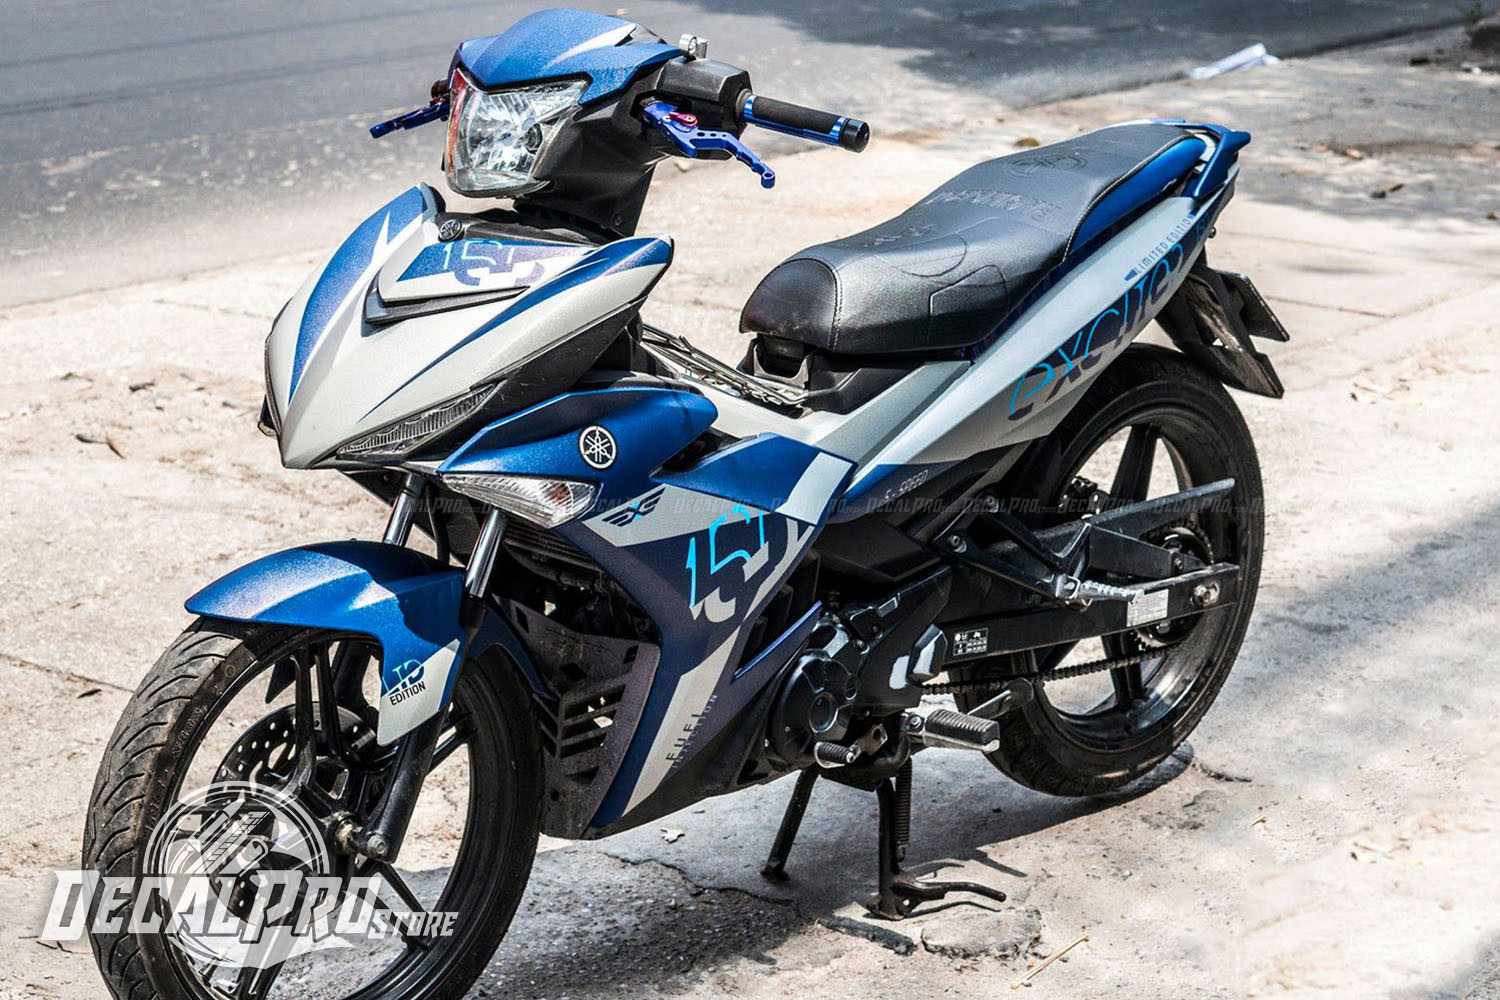 Khám phá 2018 Yamaha Exciter 150 Thái giá 434 triệu đồng